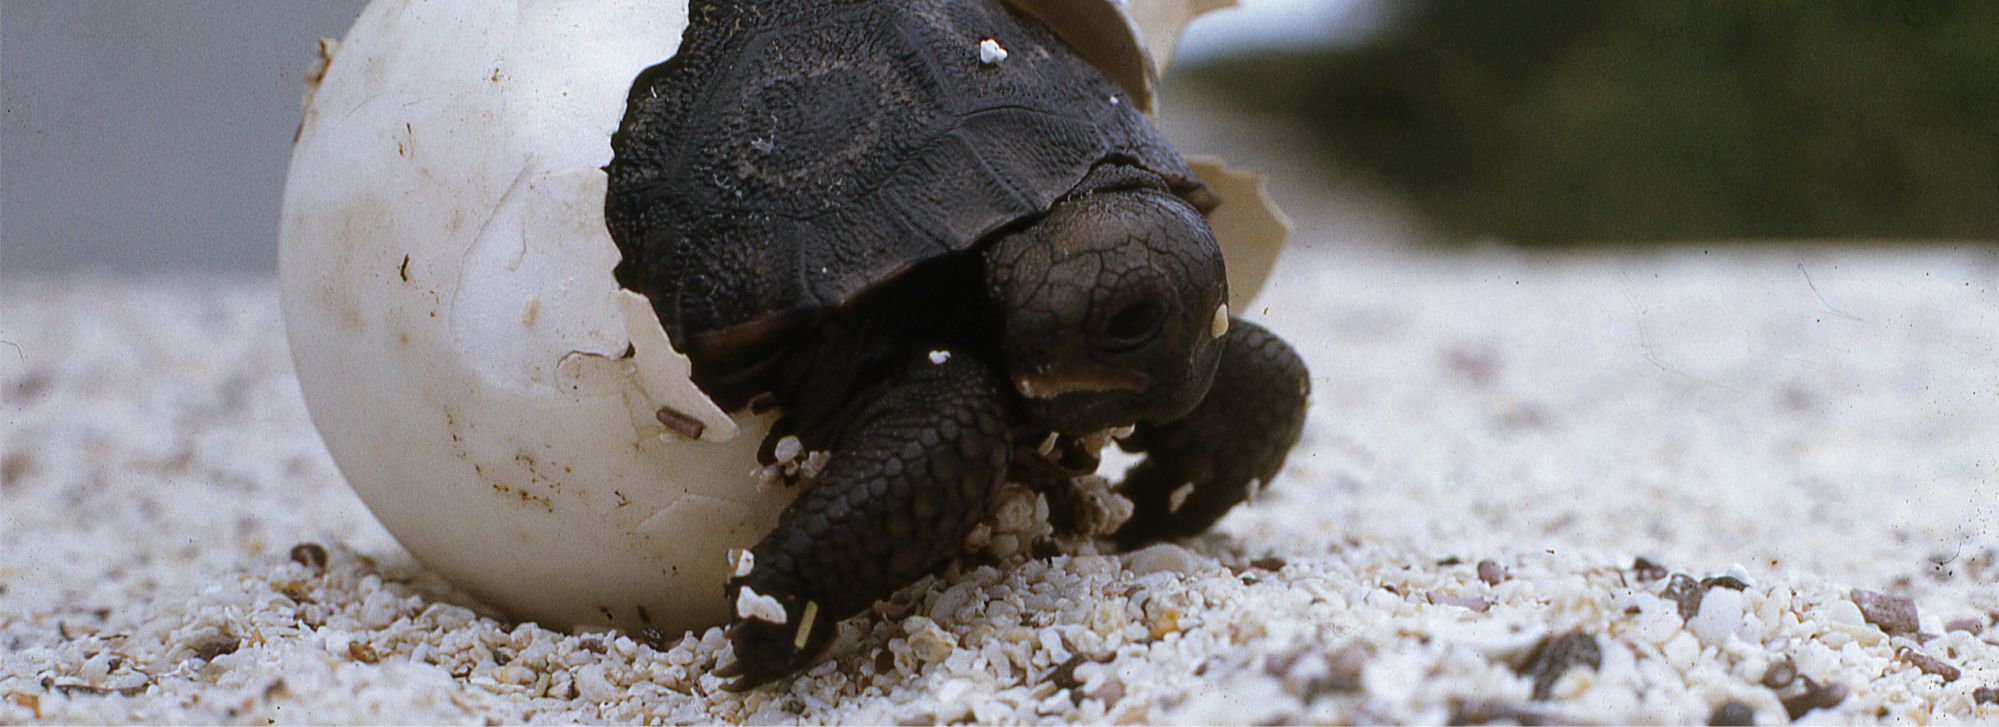 A tortoise's beginnings